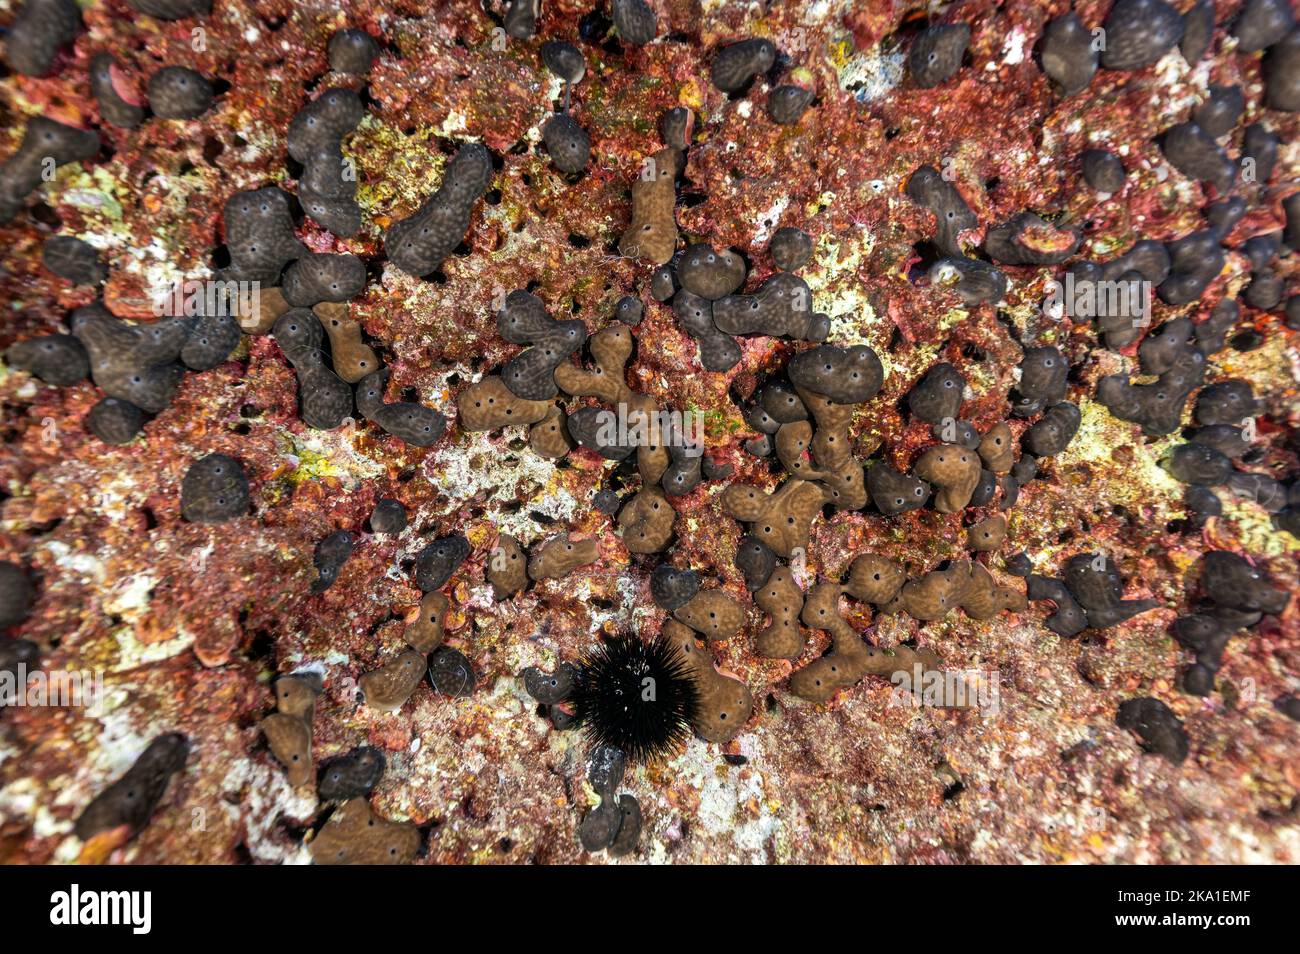 Kidney sponges, Chondrosia reniformis, Gokova Bay Turkey Stock Photo